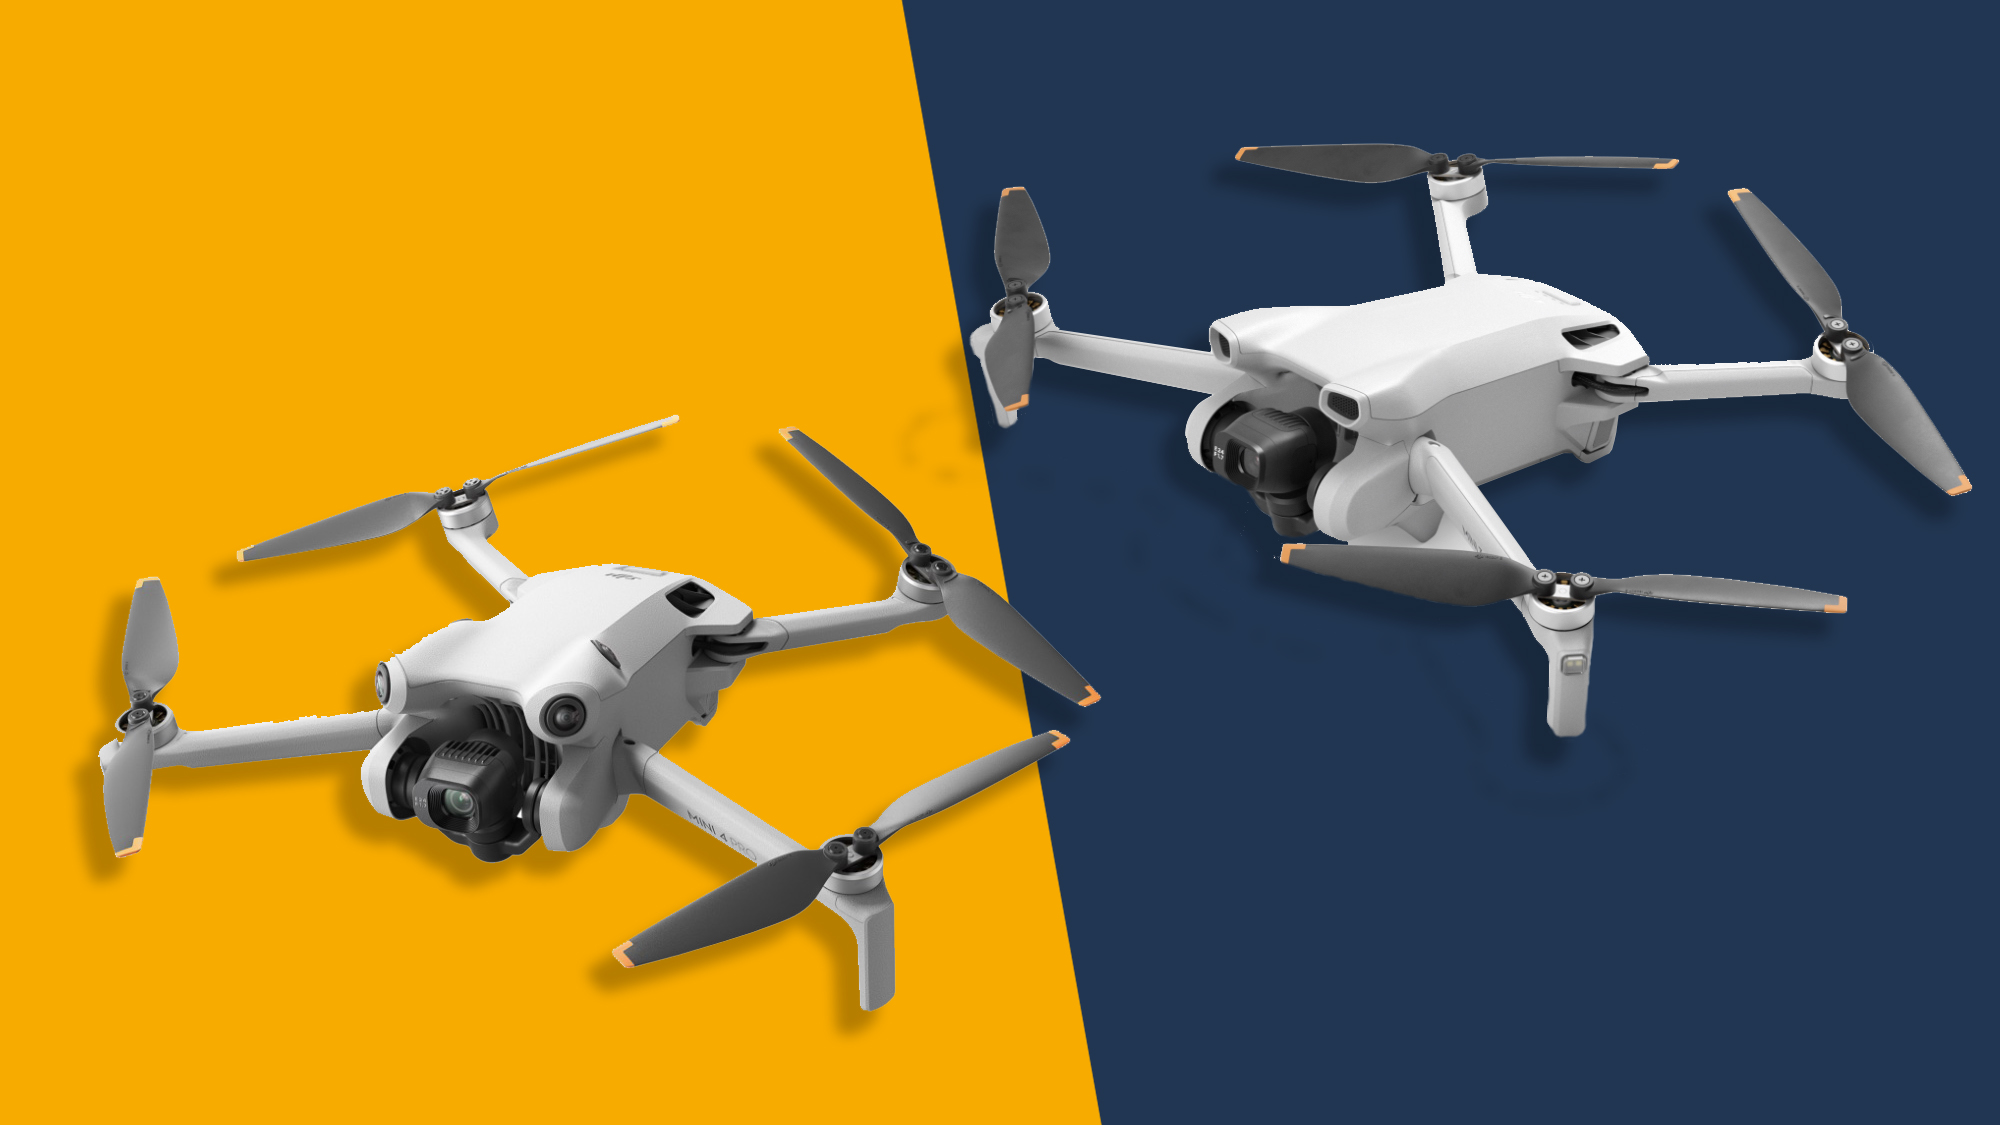 DJI Mini 4 Pro vs Mini 3 Pro: ¿qué dron elegir?